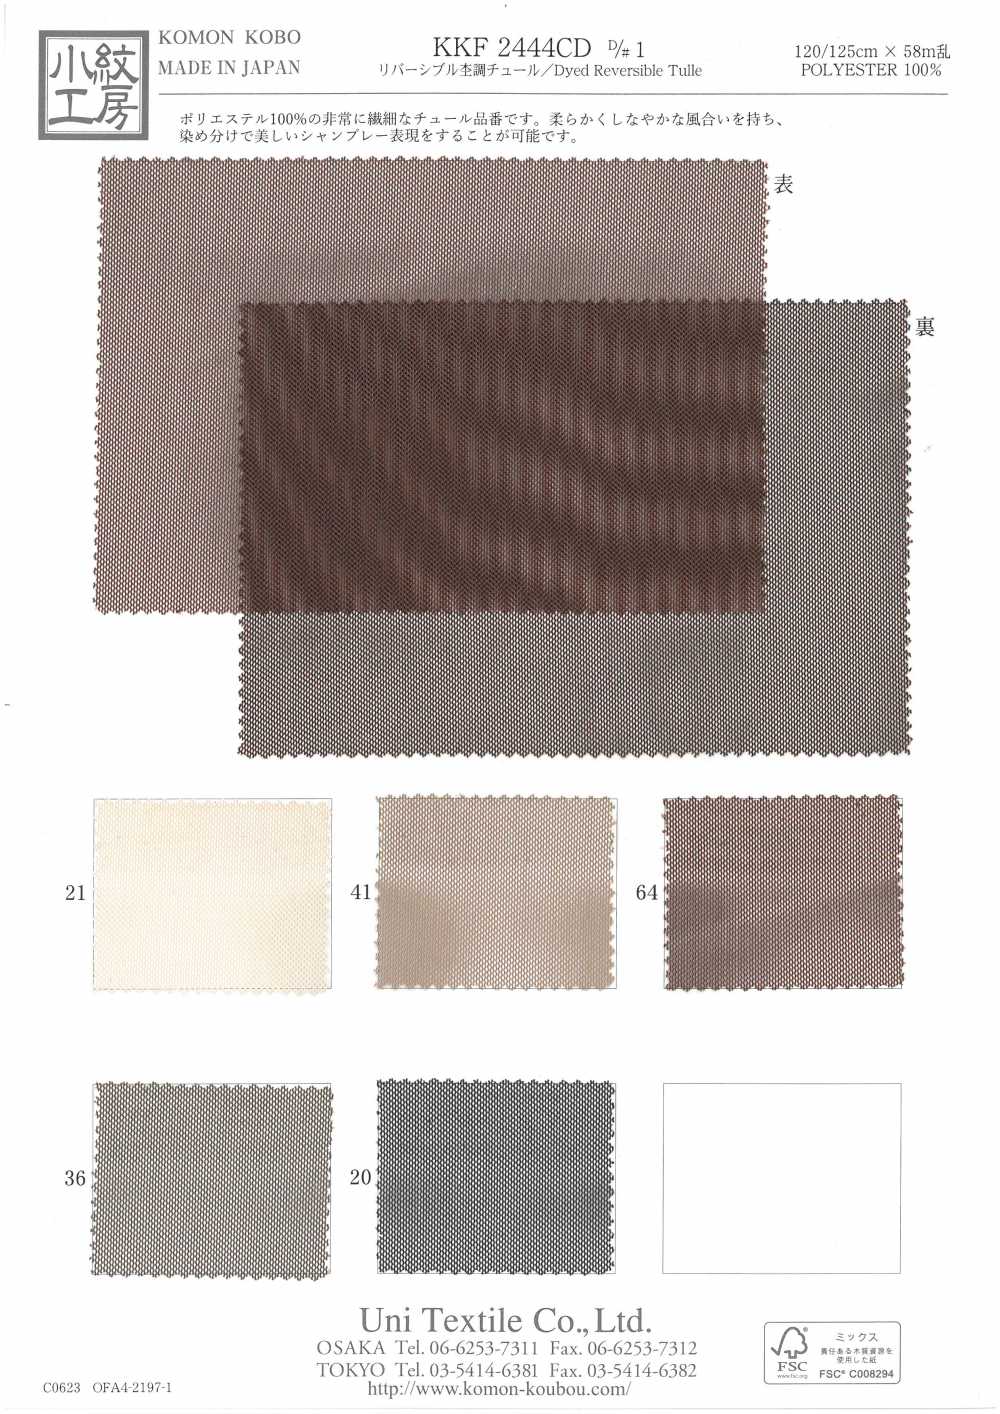 KKF2444CD-D/1 Reversible Heather Tulle[Textile / Fabric] Uni Textile